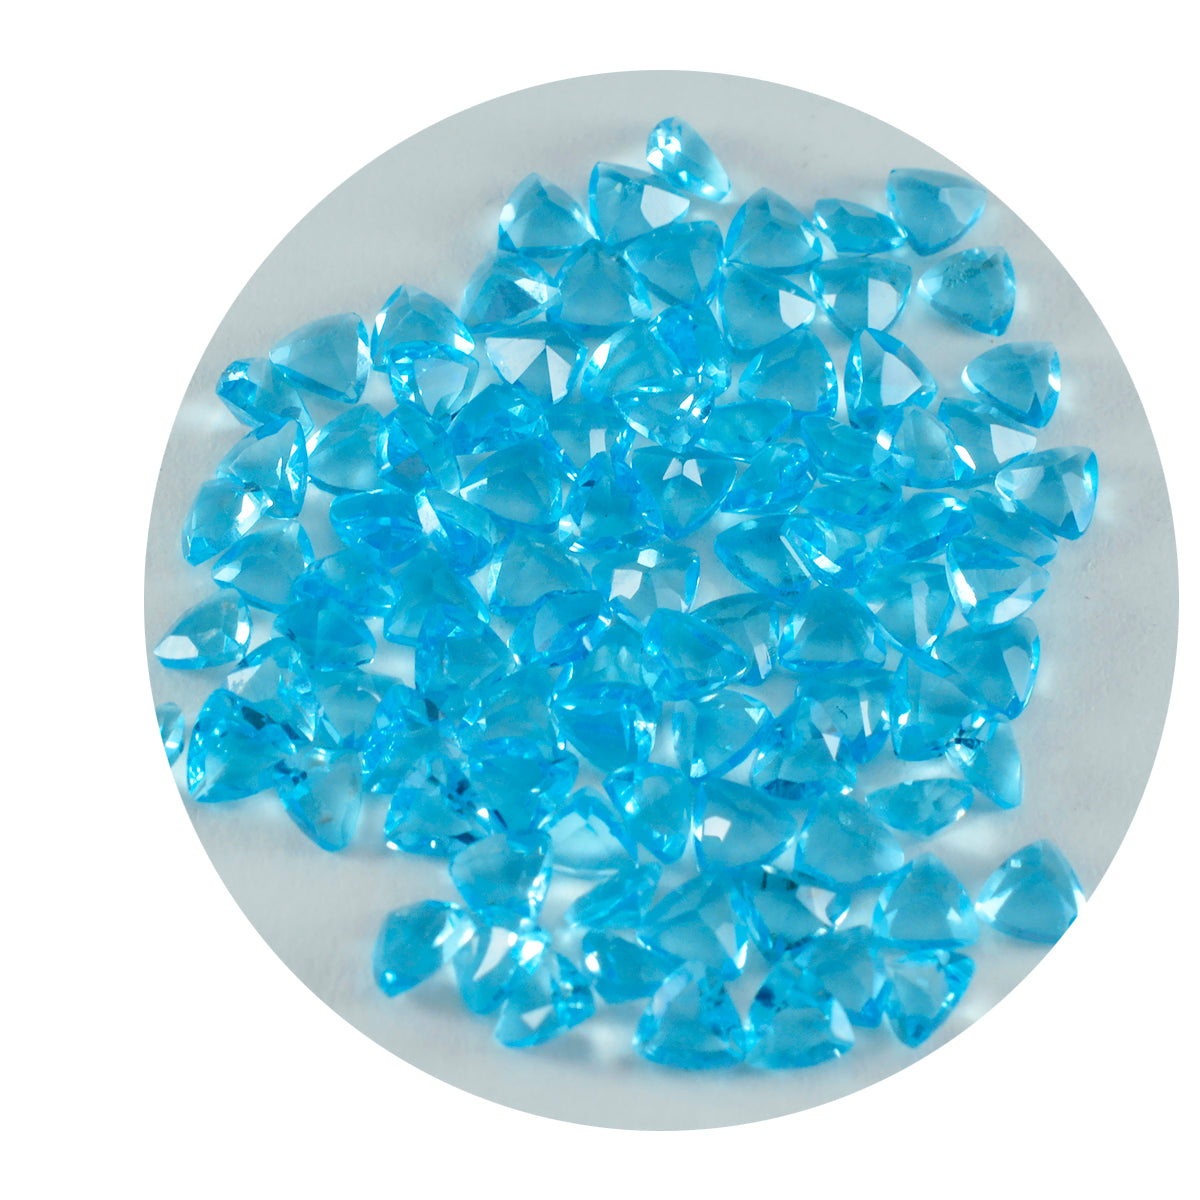 Riyogems 1PC Blue Topaz CZ Faceted 4x4 mm Trillion Shape great Quality Gemstone